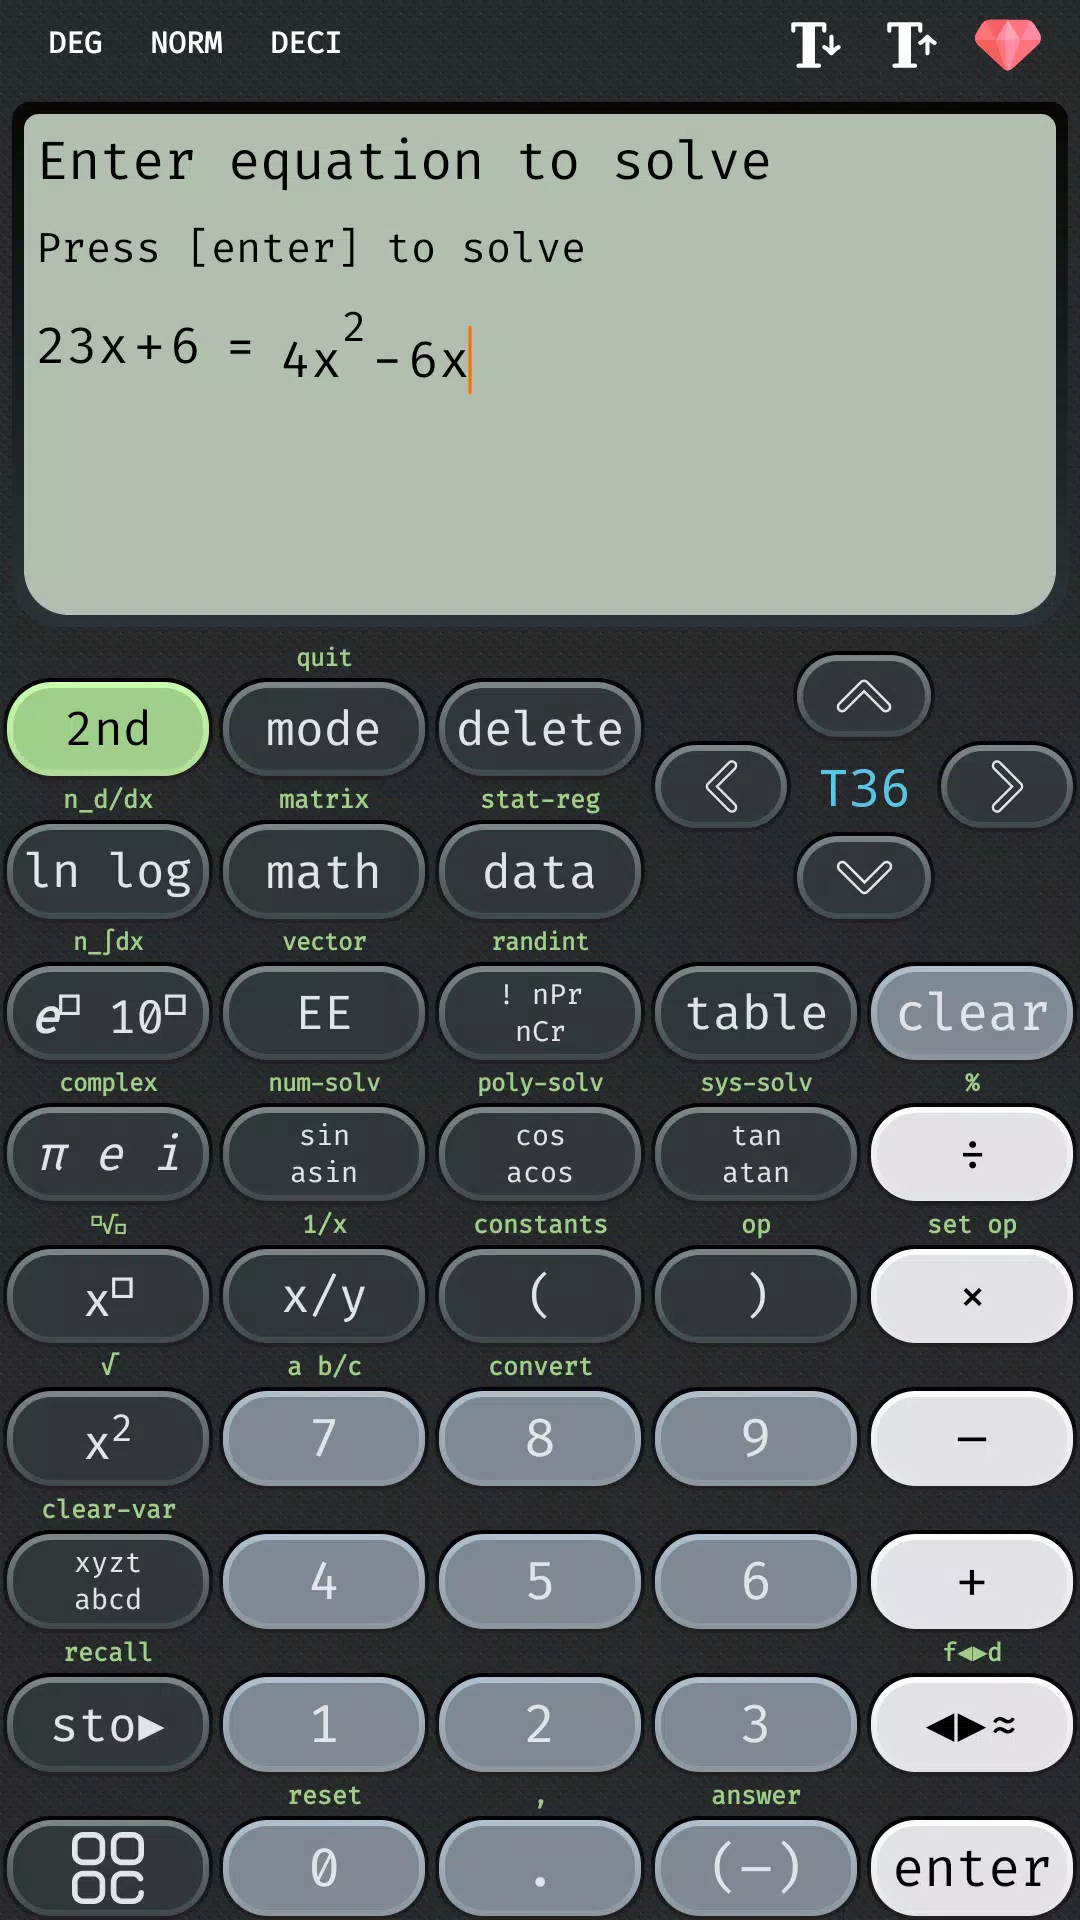 Download do APK de Calculadora Científica para Android